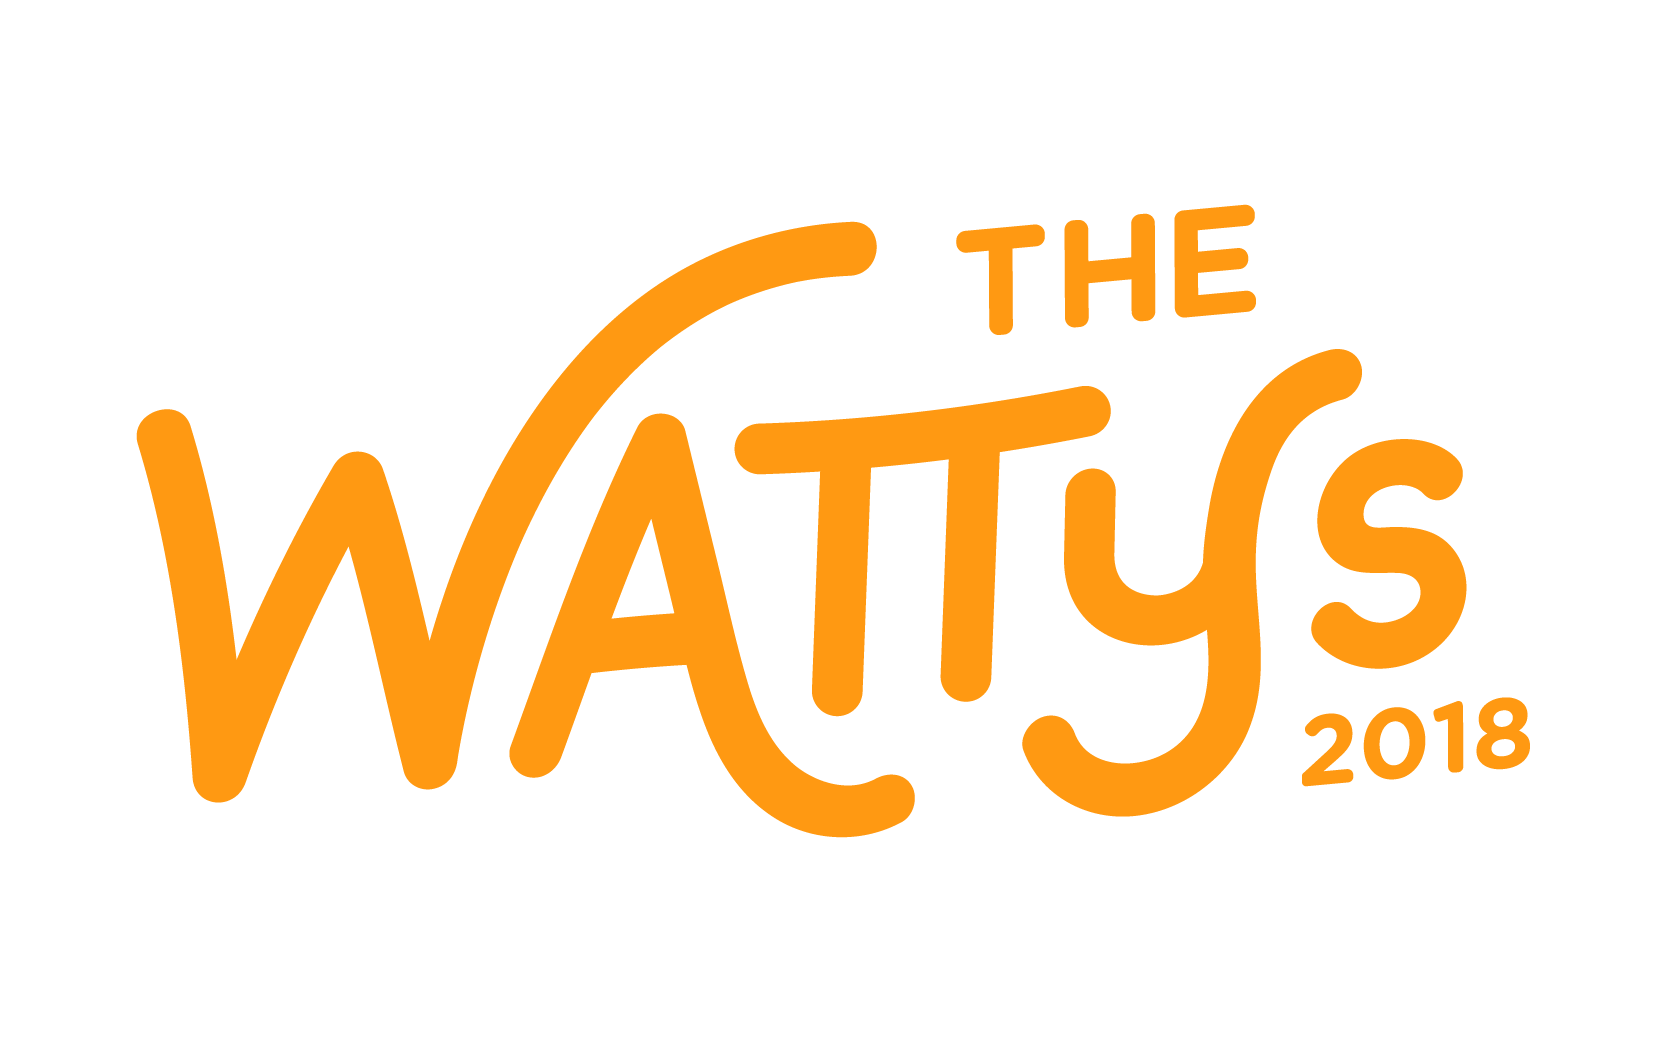 Wattpad Logo - Wattpad Celebrates Underrepresented Voices in Literature with